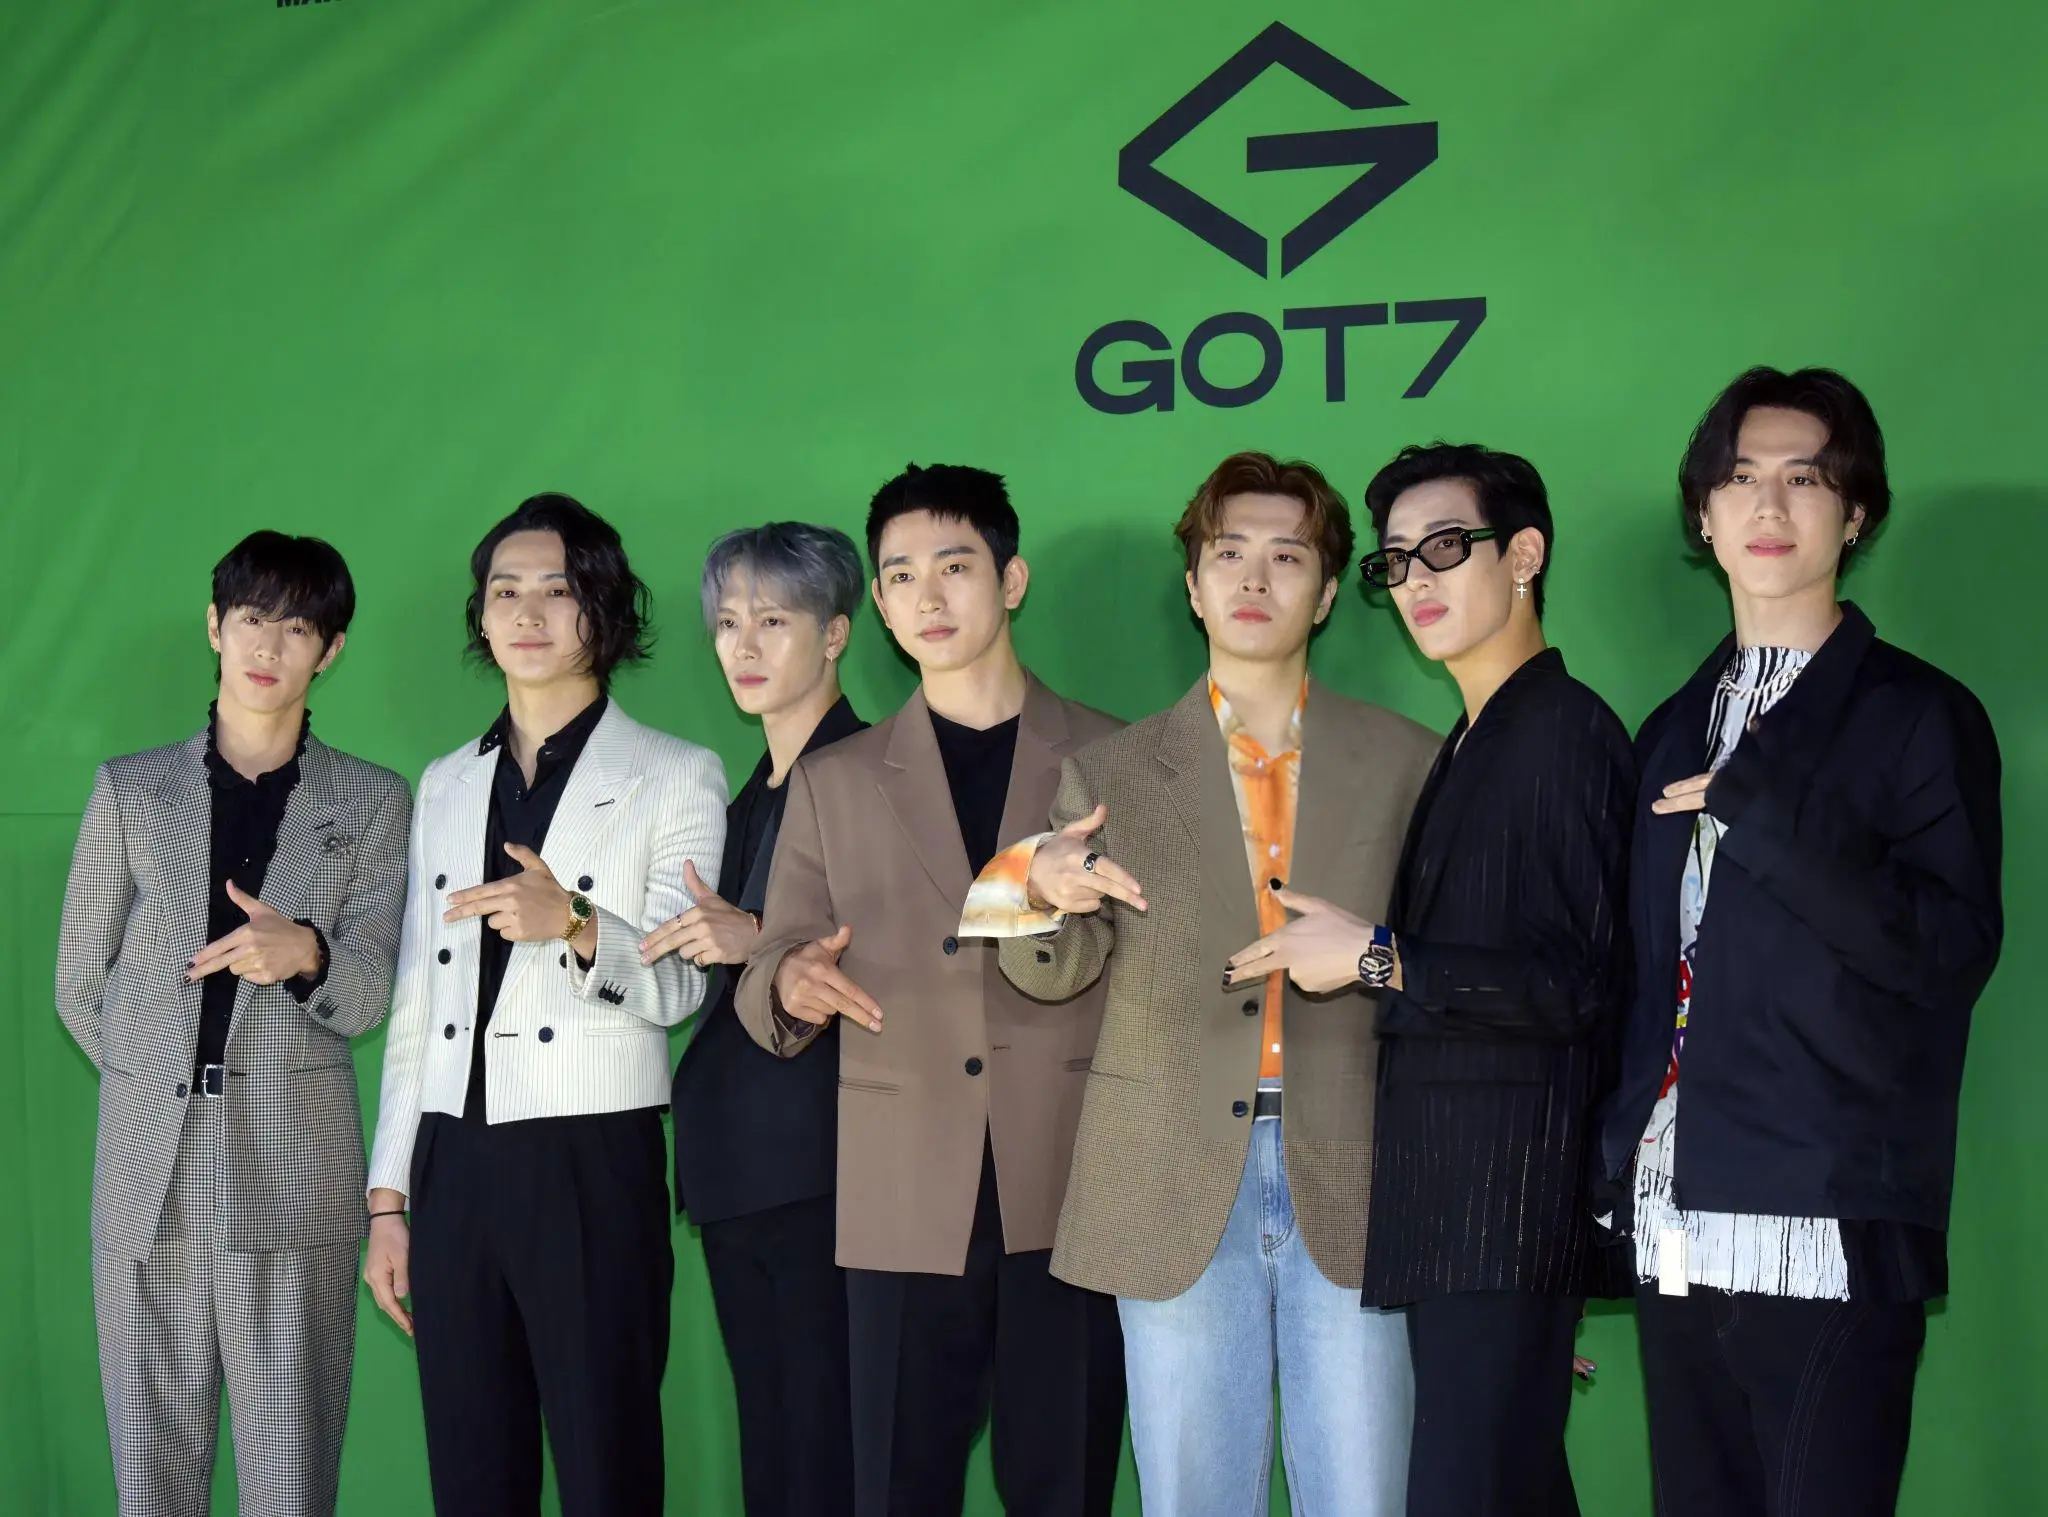 GOT7 Members: Jay B, Mark, Jackson, Jinyoung, Youngjae, BamBam, and Yugyeom